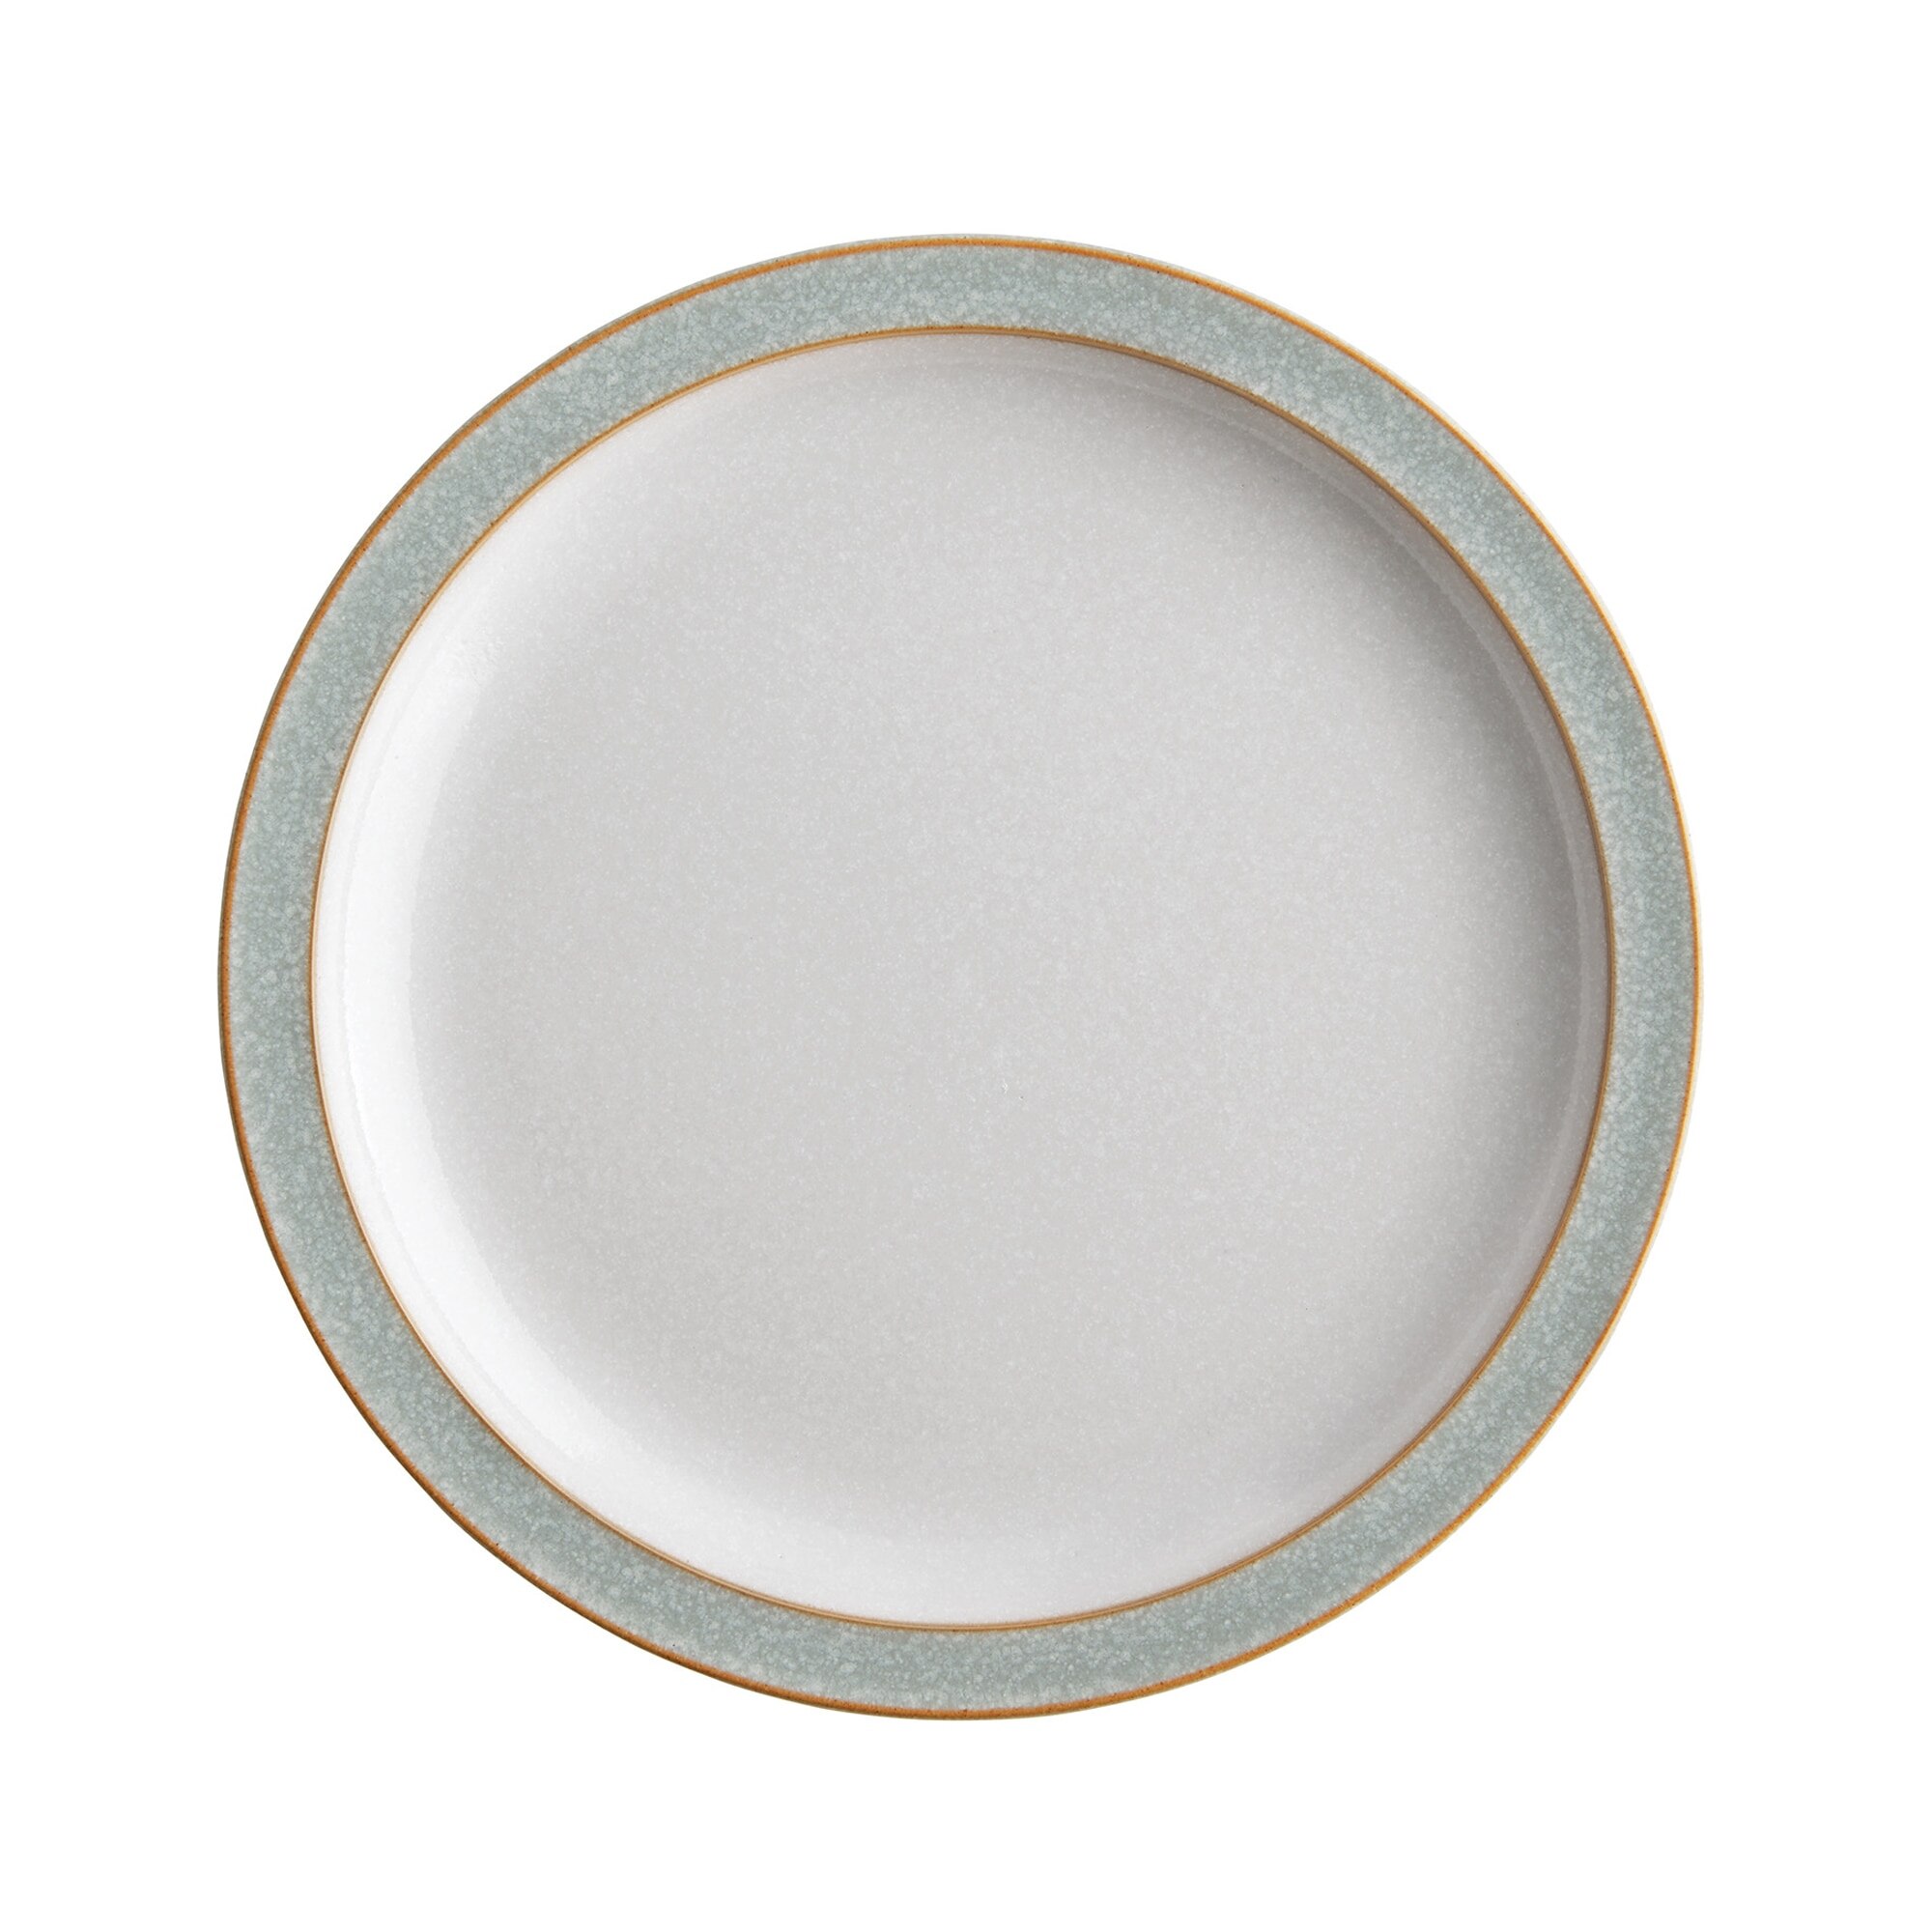 Elements Light Grey Dinner Plate